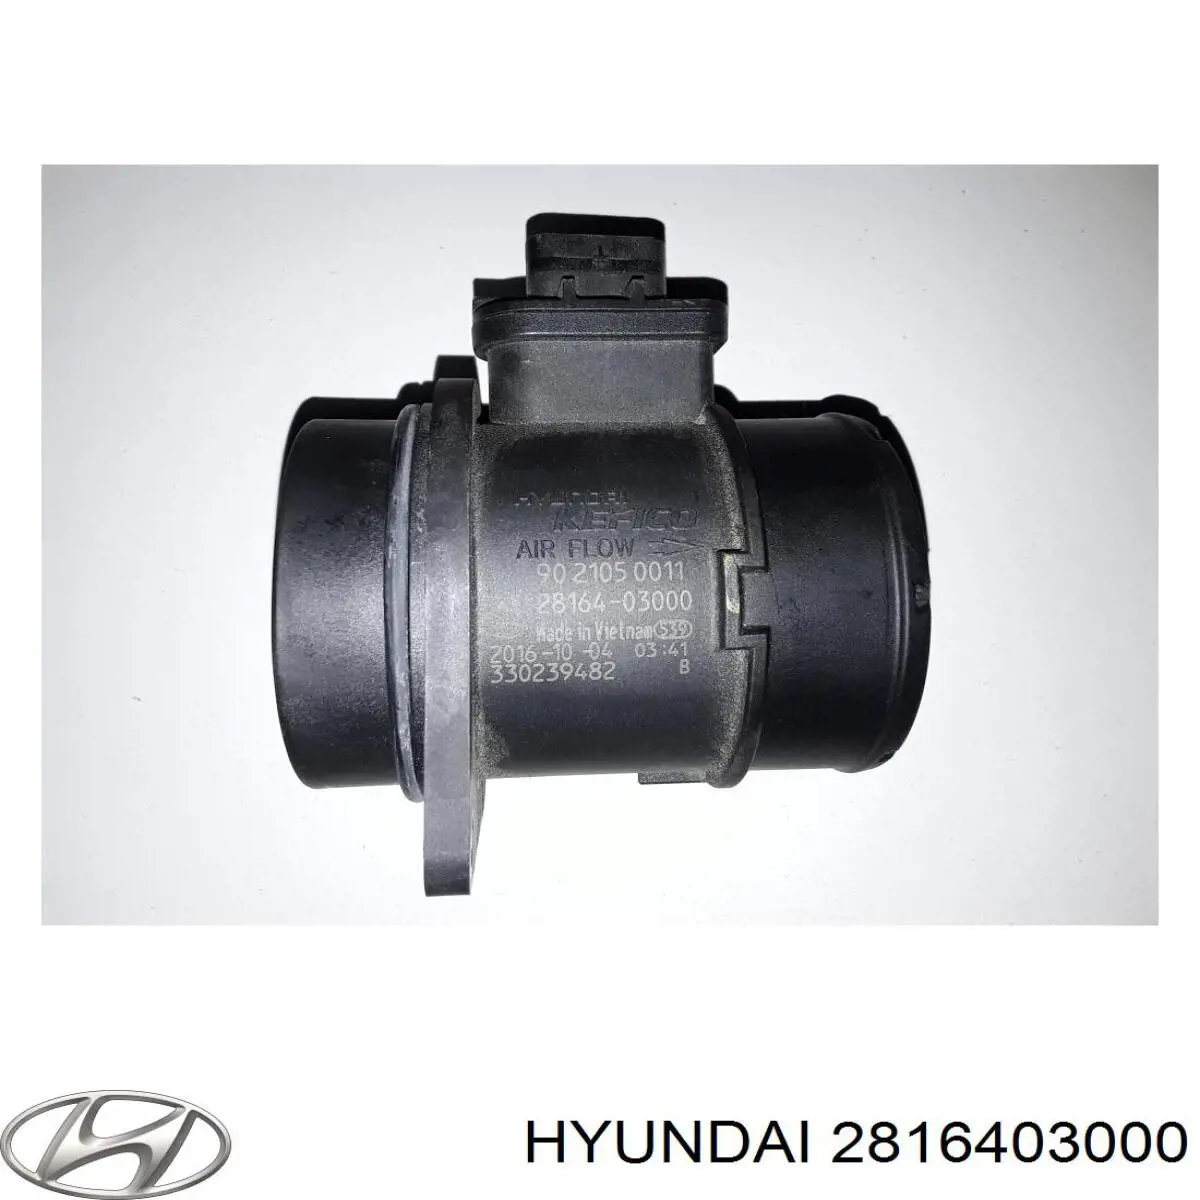 2816403000 Hyundai/Kia sensor de fluxo (consumo de ar, medidor de consumo M.A.F. - (Mass Airflow))